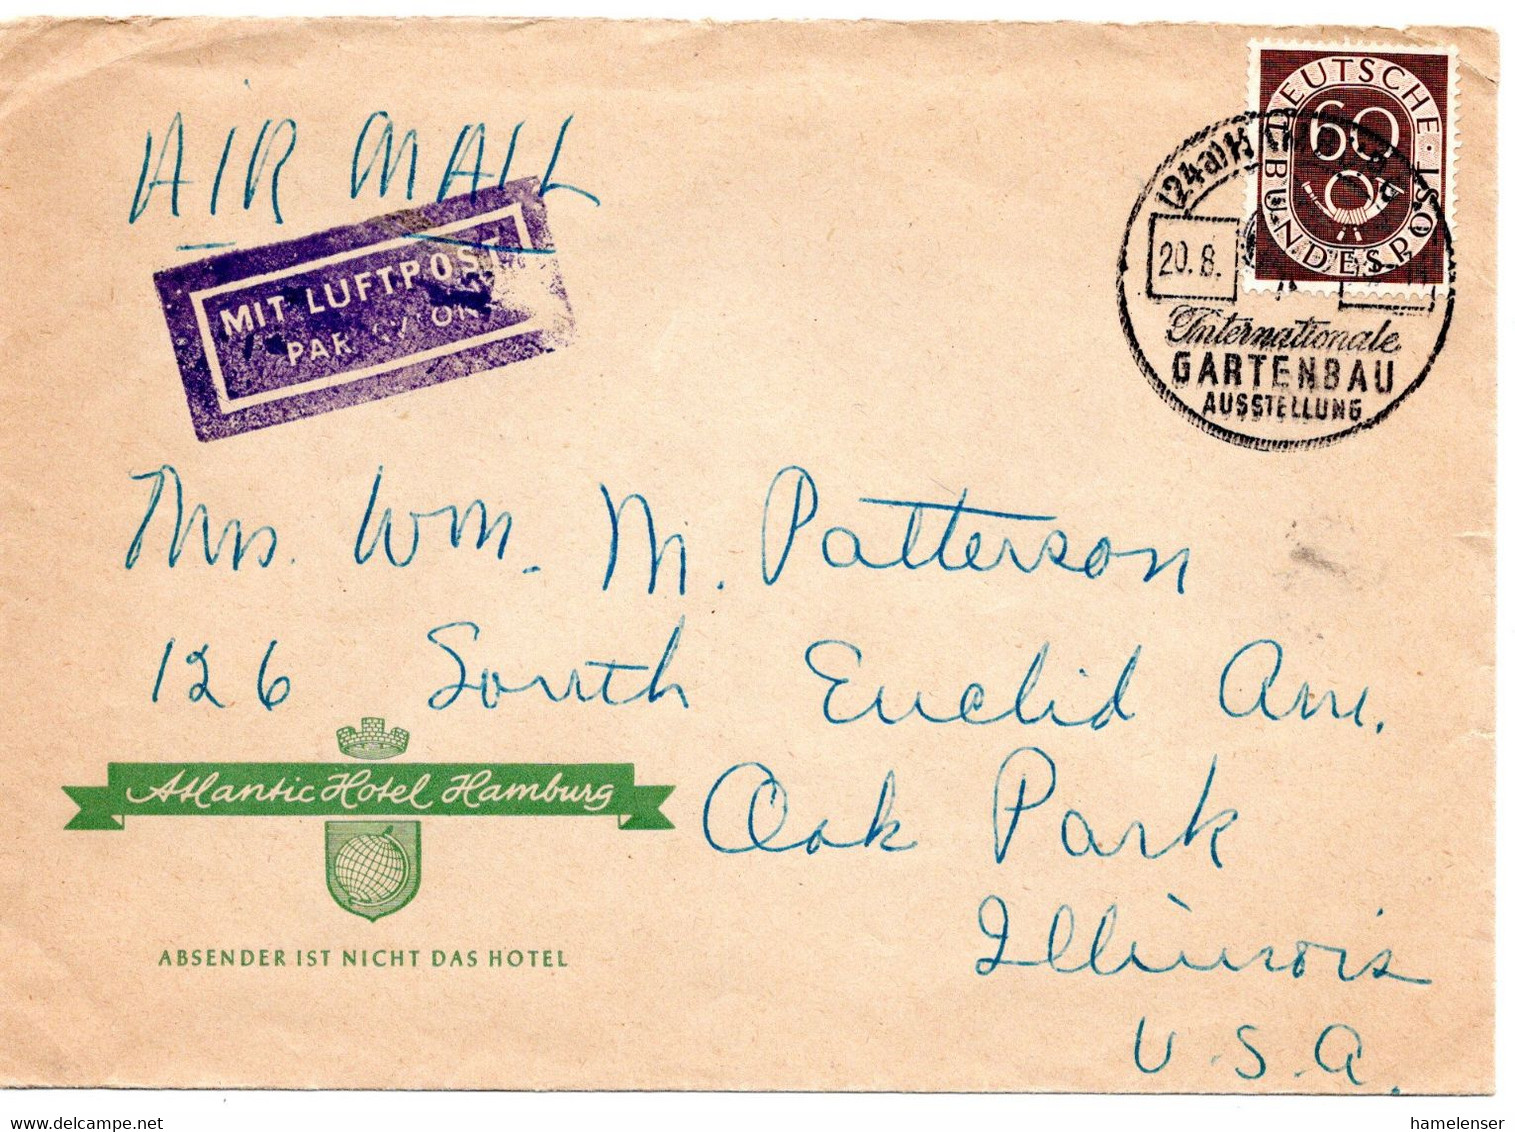 55680 - Bund - 1953 - 60Pfg. Posthorn EF A. LpBf. M. SoStpl. HAMBURG - GARTENBAUAUSSTELLUNG -> Oak Park, IL (USA) - Cartas & Documentos